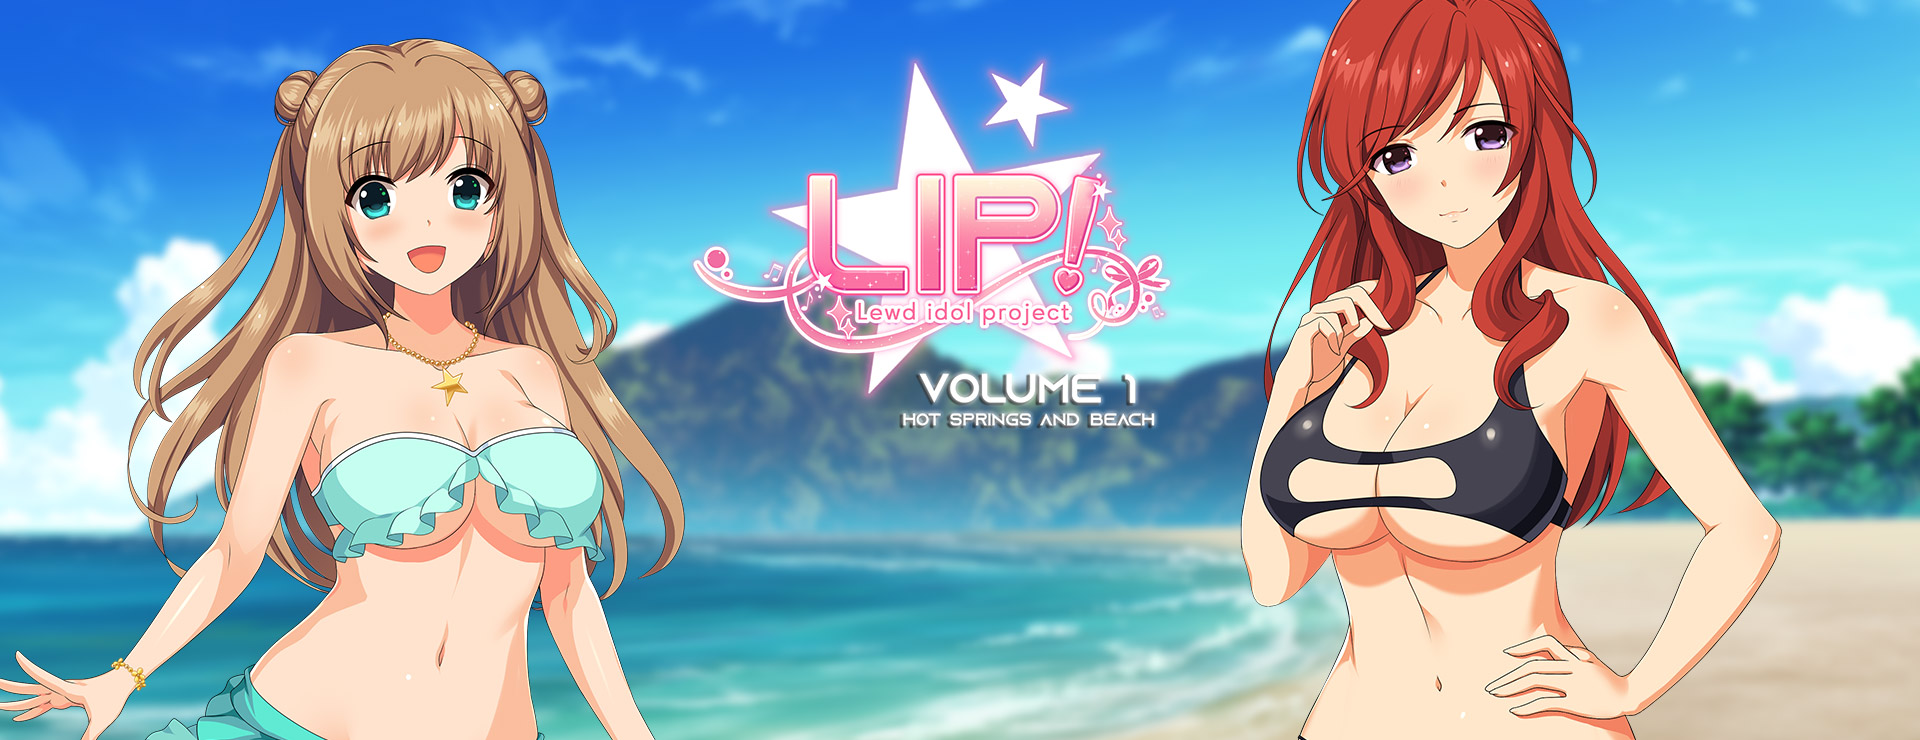 LIP! Lewd Idol Project Vol. 1 - Hot Springs and Beach Episodes - ビジュアルノベル ゲーム